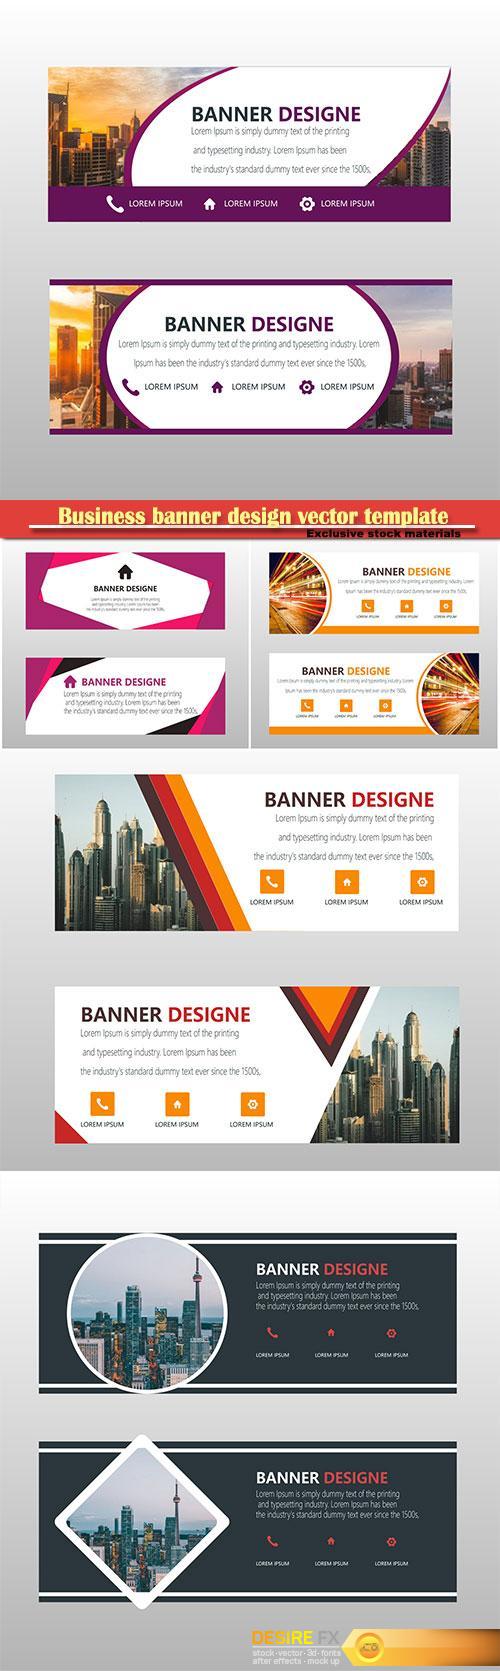 Business banner design vector template